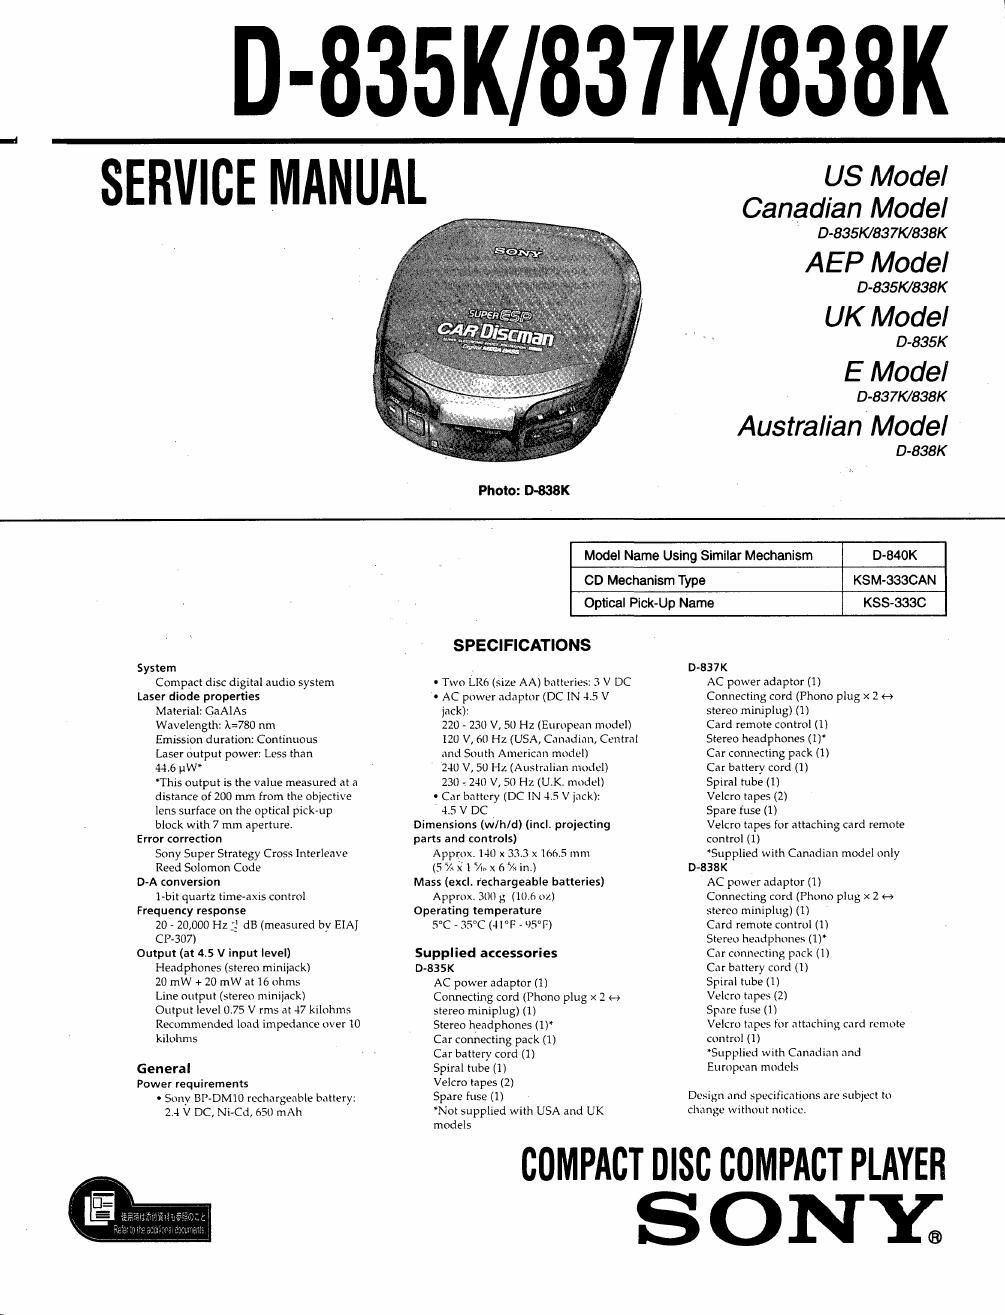 sony d 838 k service manual